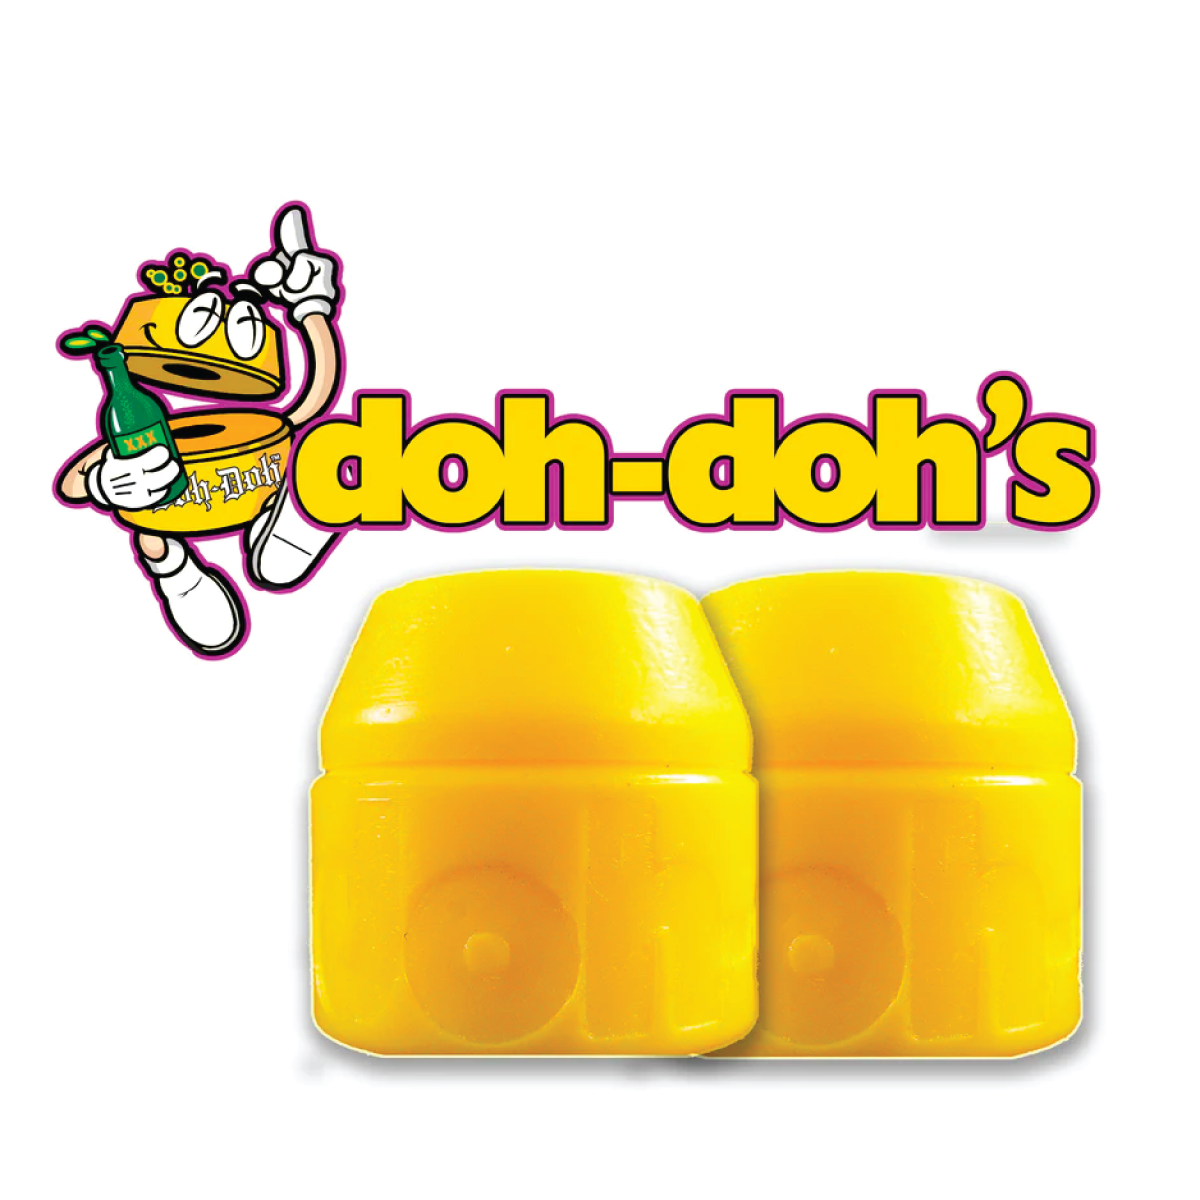 Short's Doh-Doh Bushing's